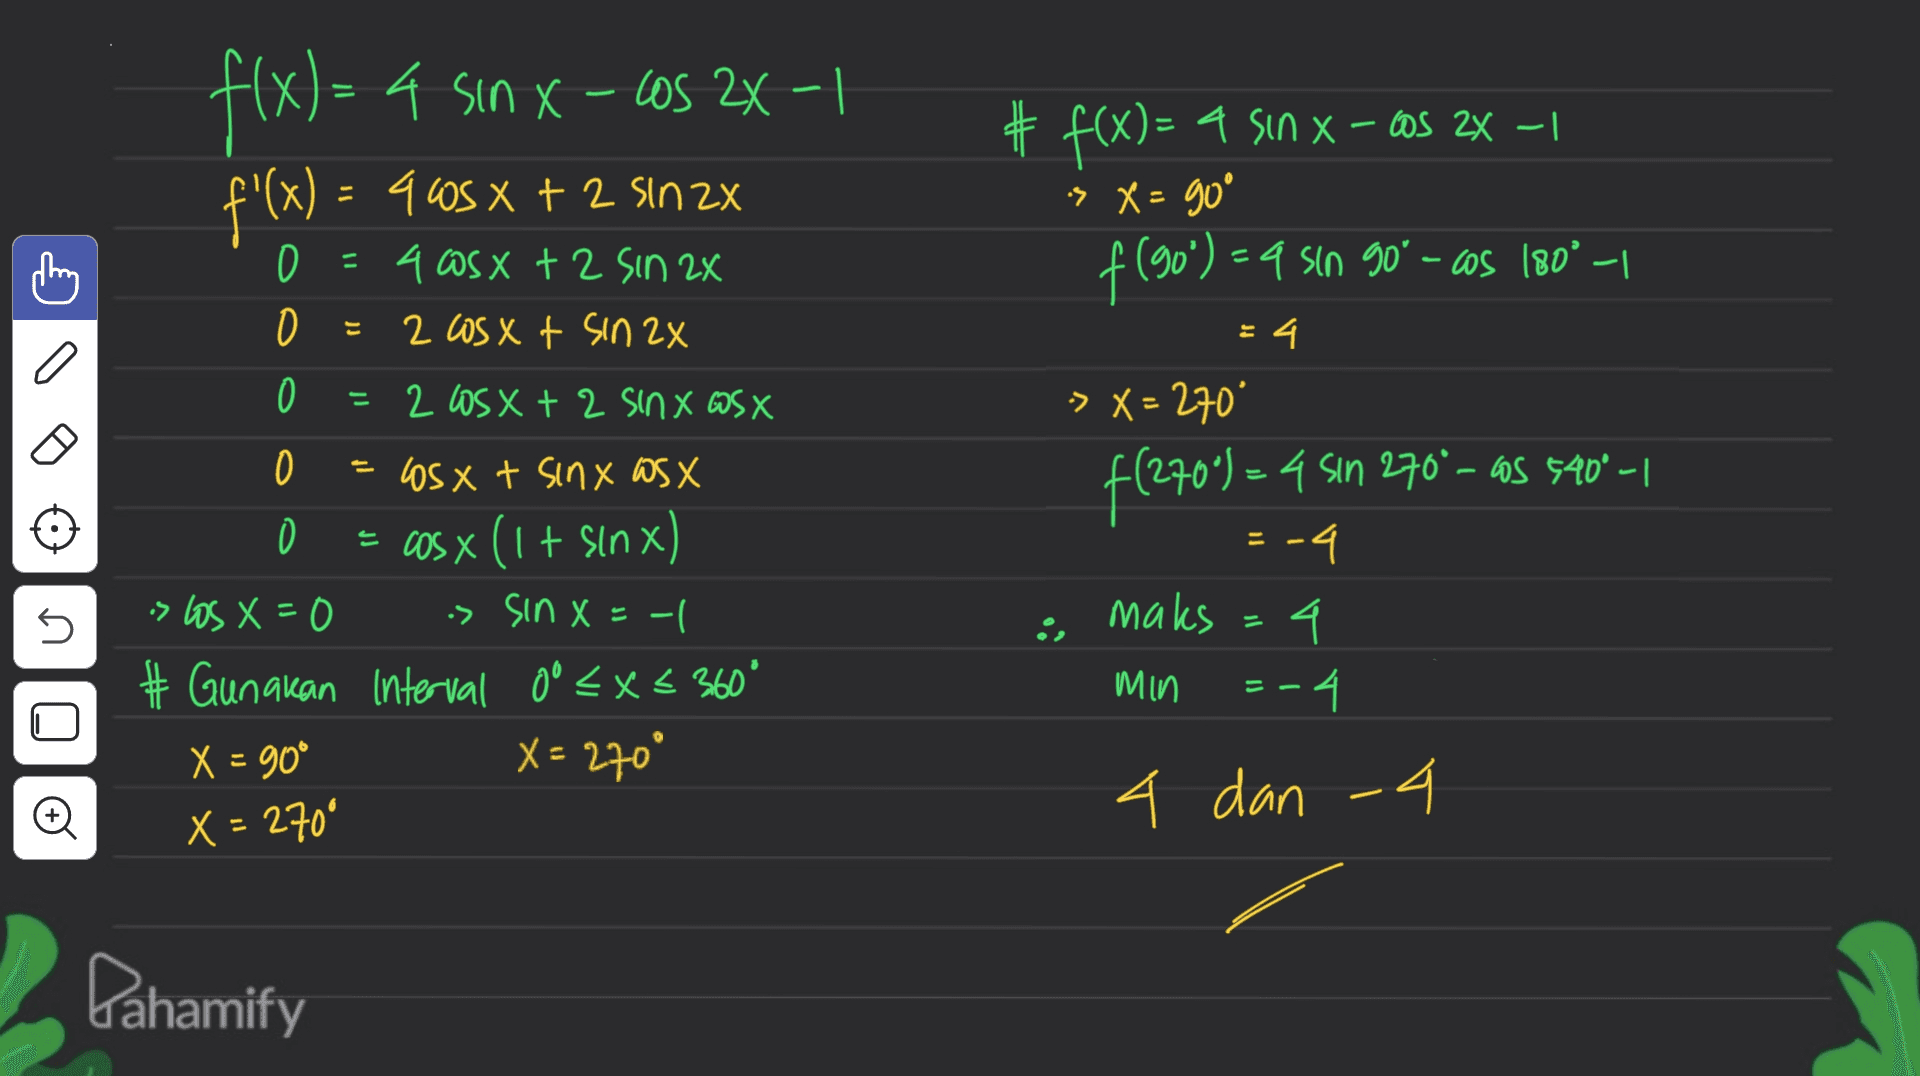 X-- f(x) = 4 sin x - cos 2x-1 f'(x) = 9 60s x + 2 sin 2x # f(x)= 4 Sin x – cos 2x – 1 :> X = goº f(90) = 9 sin 90°-cos (80° — = 34 -> X = 270" 0 = 4 osx + 2 sin 2x 0 2 Los xt sin 2x 0 2 OS X + 2 Sinx WSX 0 OsX t sinx as X = cos x (1 + sinx) > Los X=0 is sin X=-| # Gunakan interval oo <x< 360° X = 90° X = 270° f(270*) = 4 sin 270° – as 5409_1 maks = -4 4 = -4. n Min = 4 dan 4 X = 270° Pahamify 